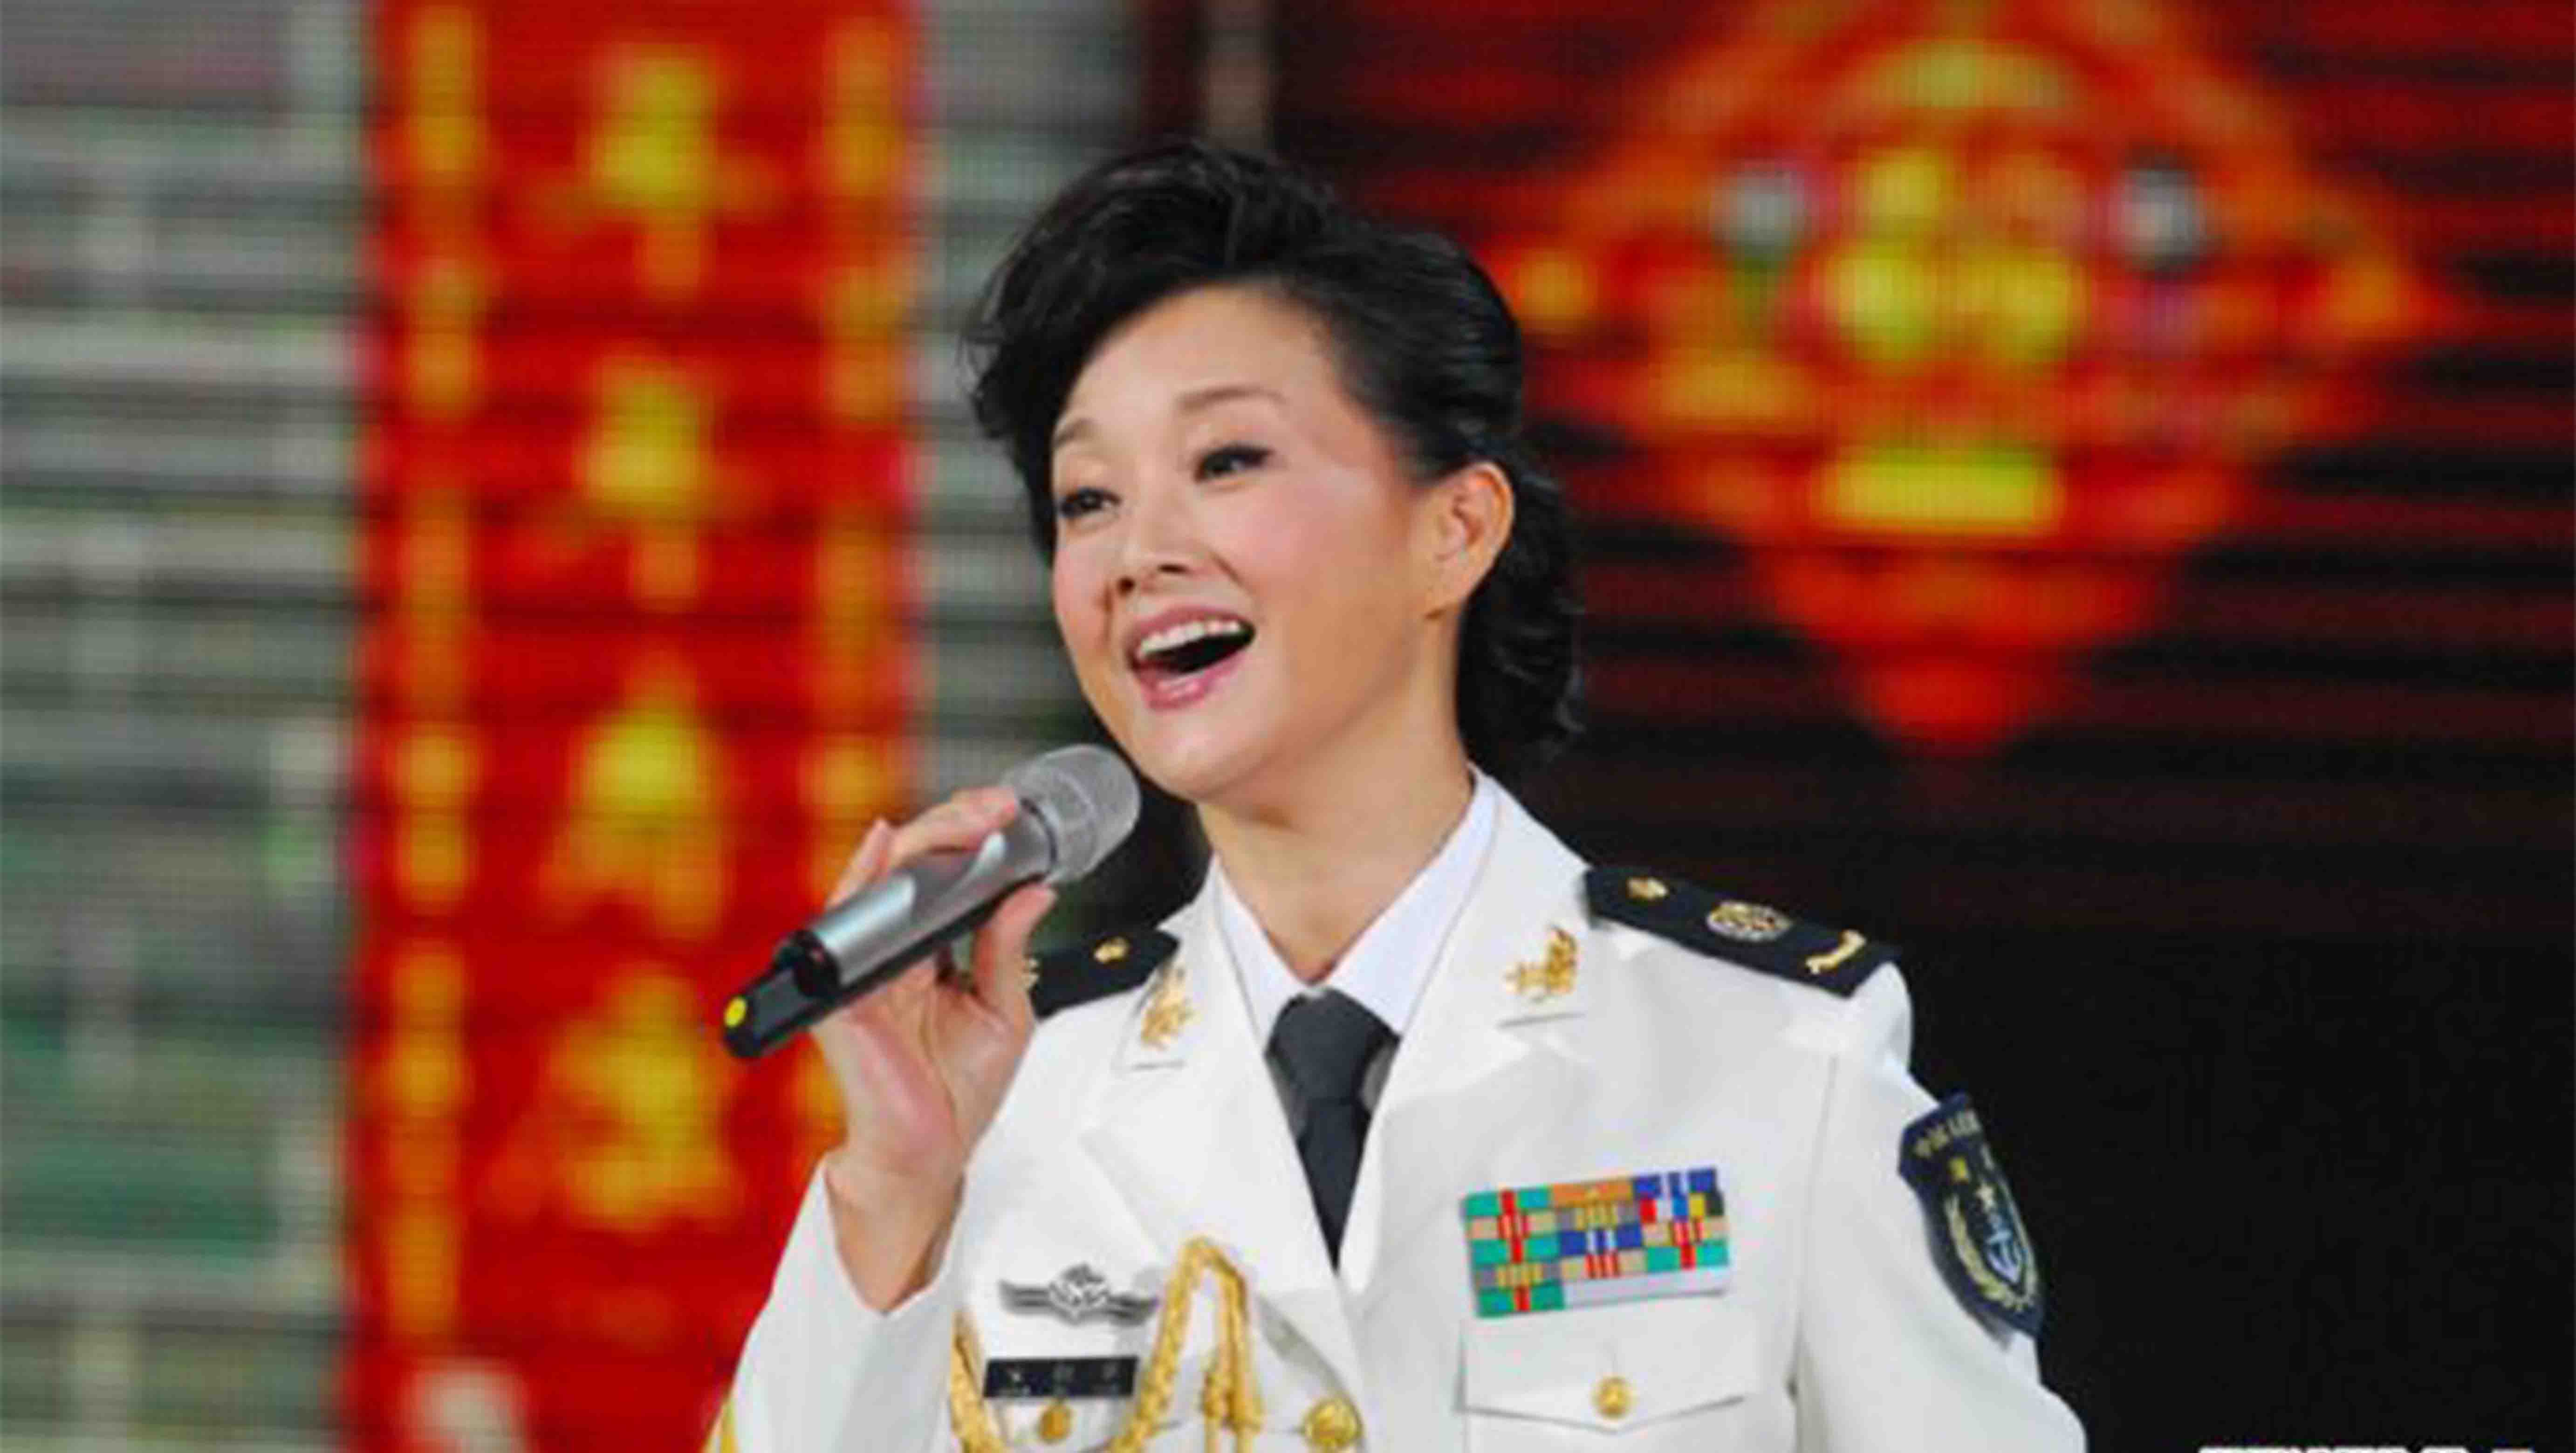 Sensitive: Rumors on PLA Singer Song Zuying, More